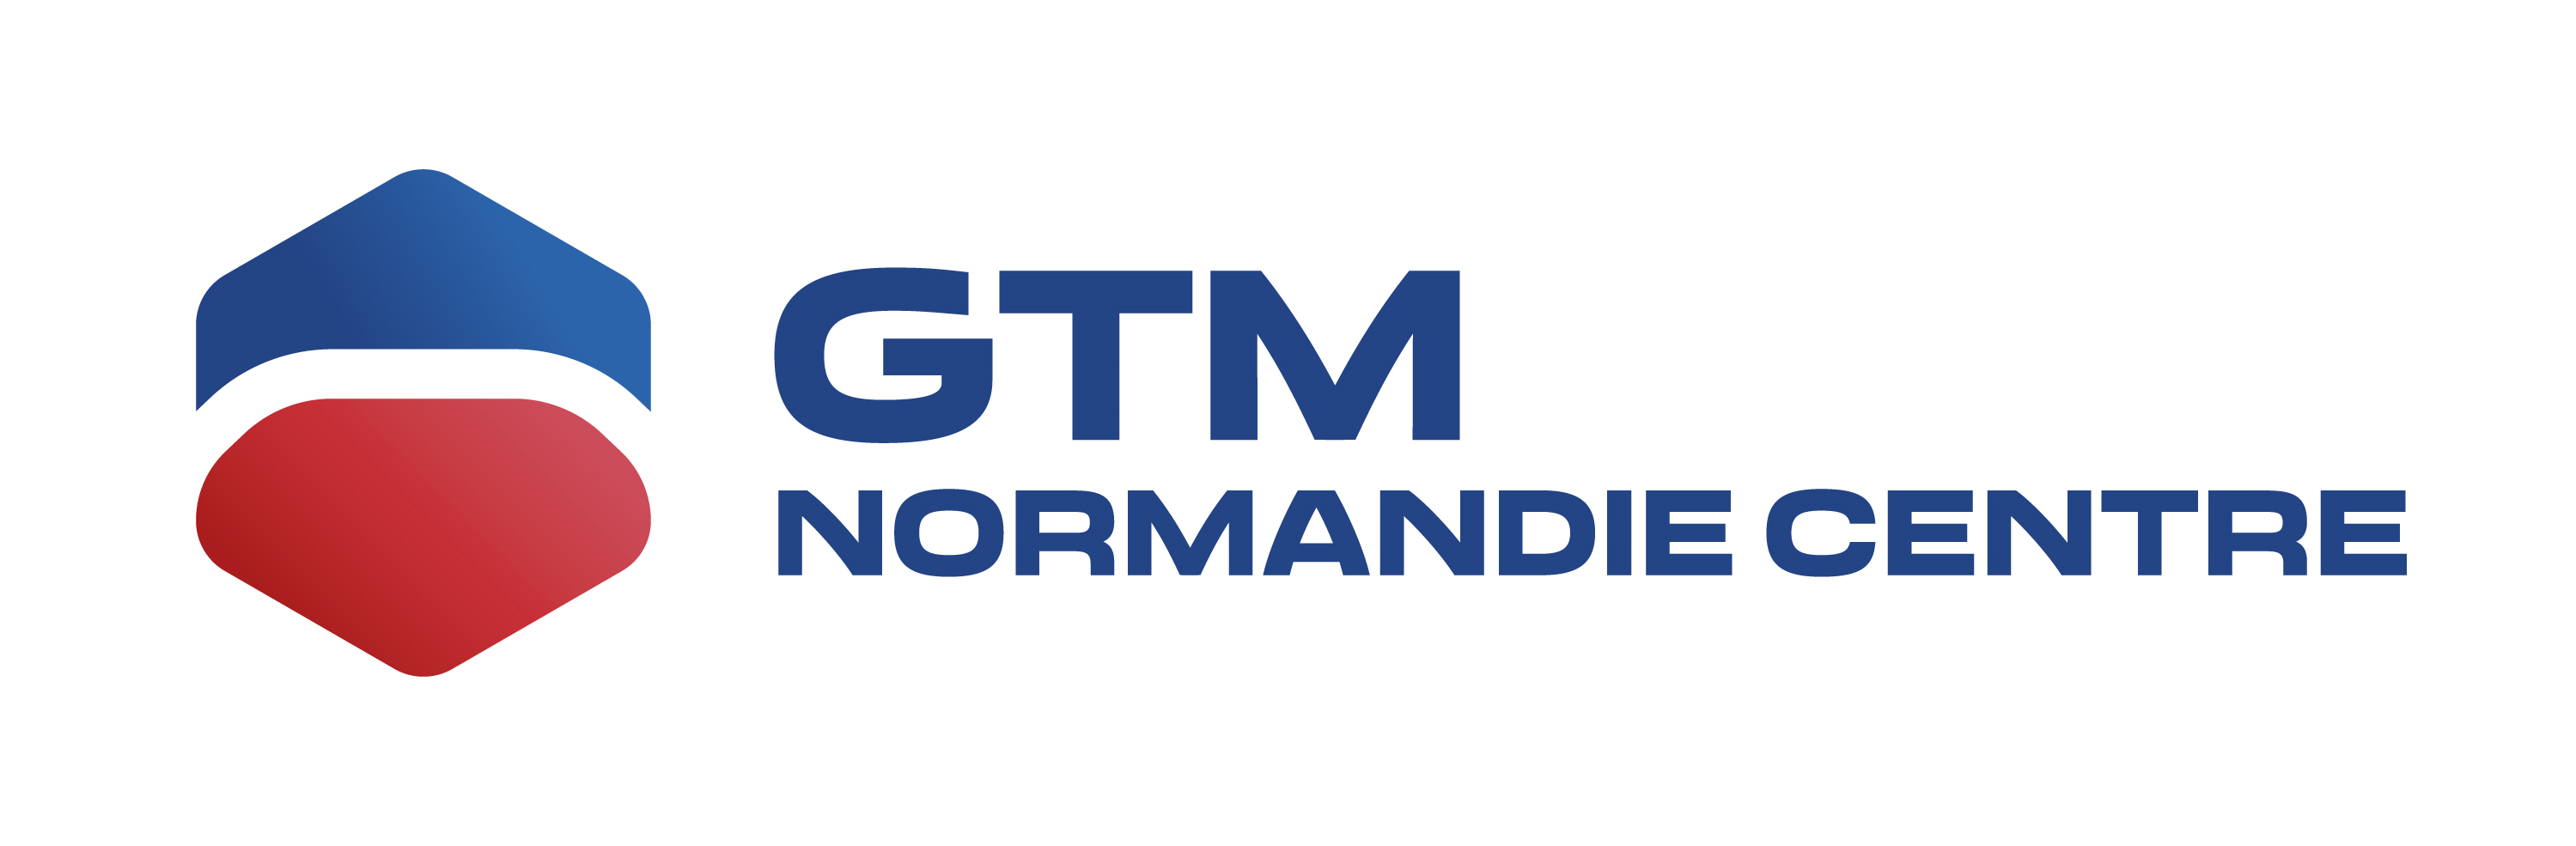 GTM Normandie Centre (MTC)